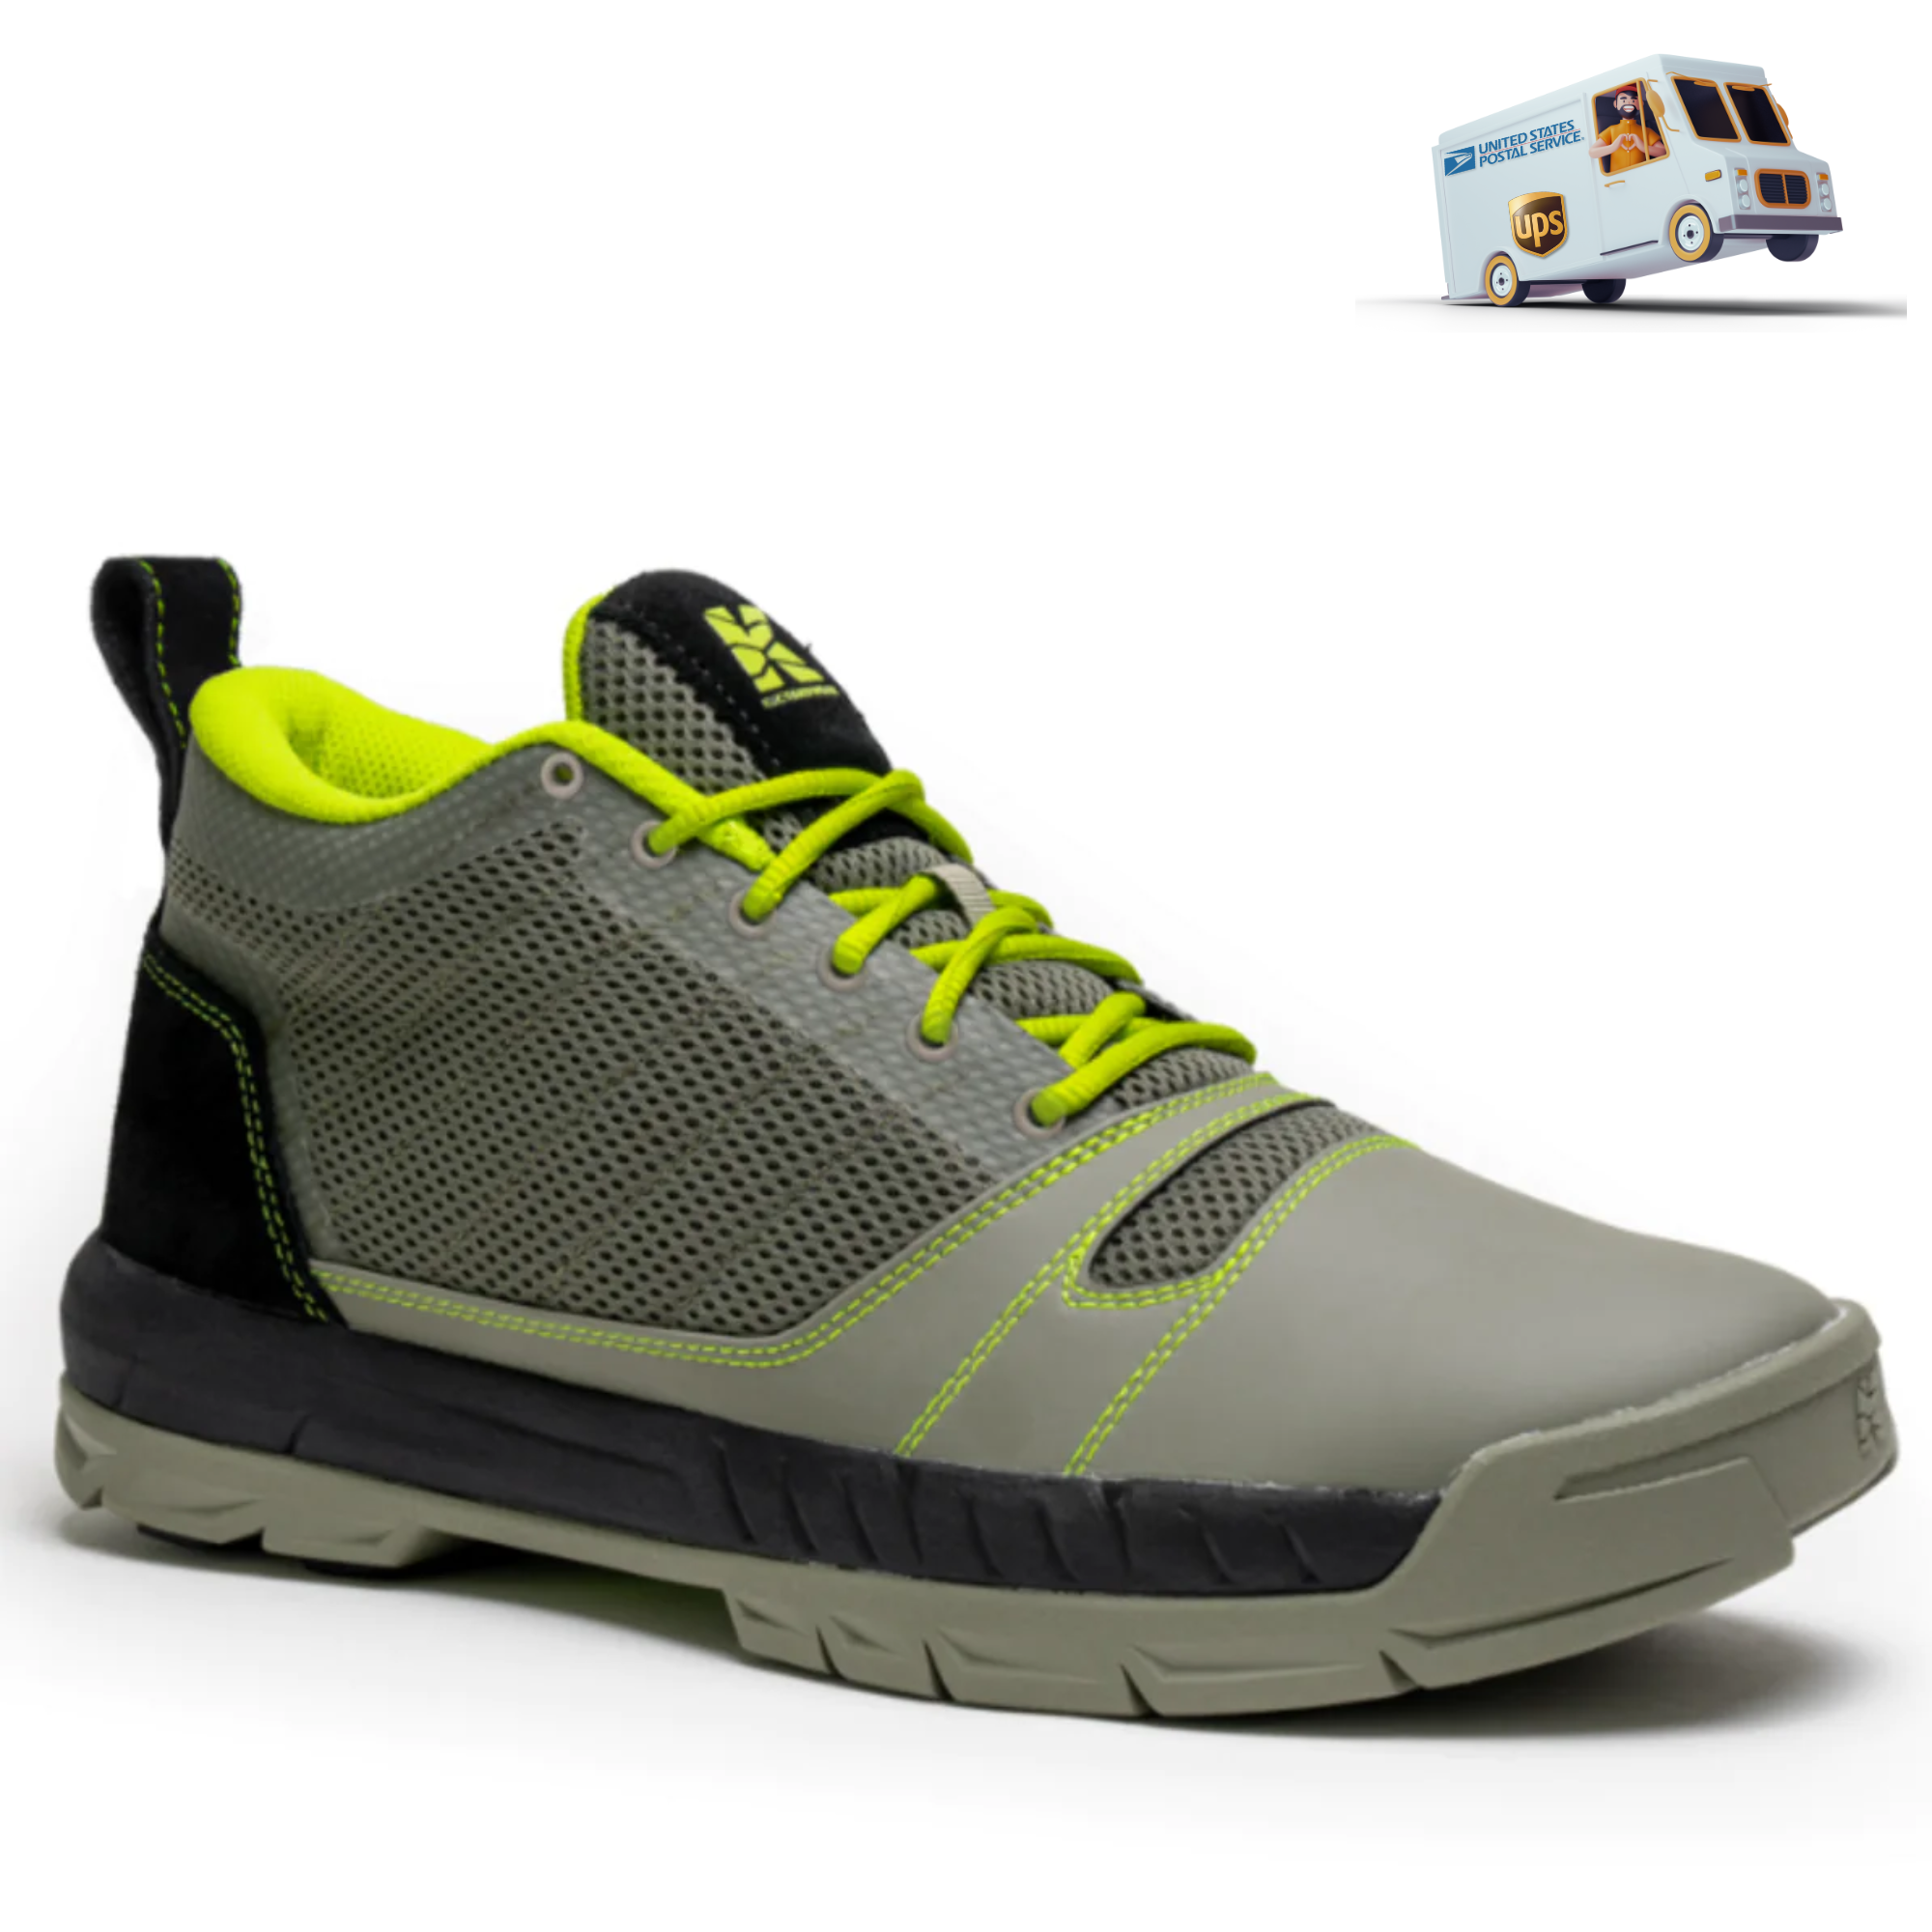 Men's Kujo Lightweight Breathable Mesh Water Resistant Yard Work Shoe in Gray/Green